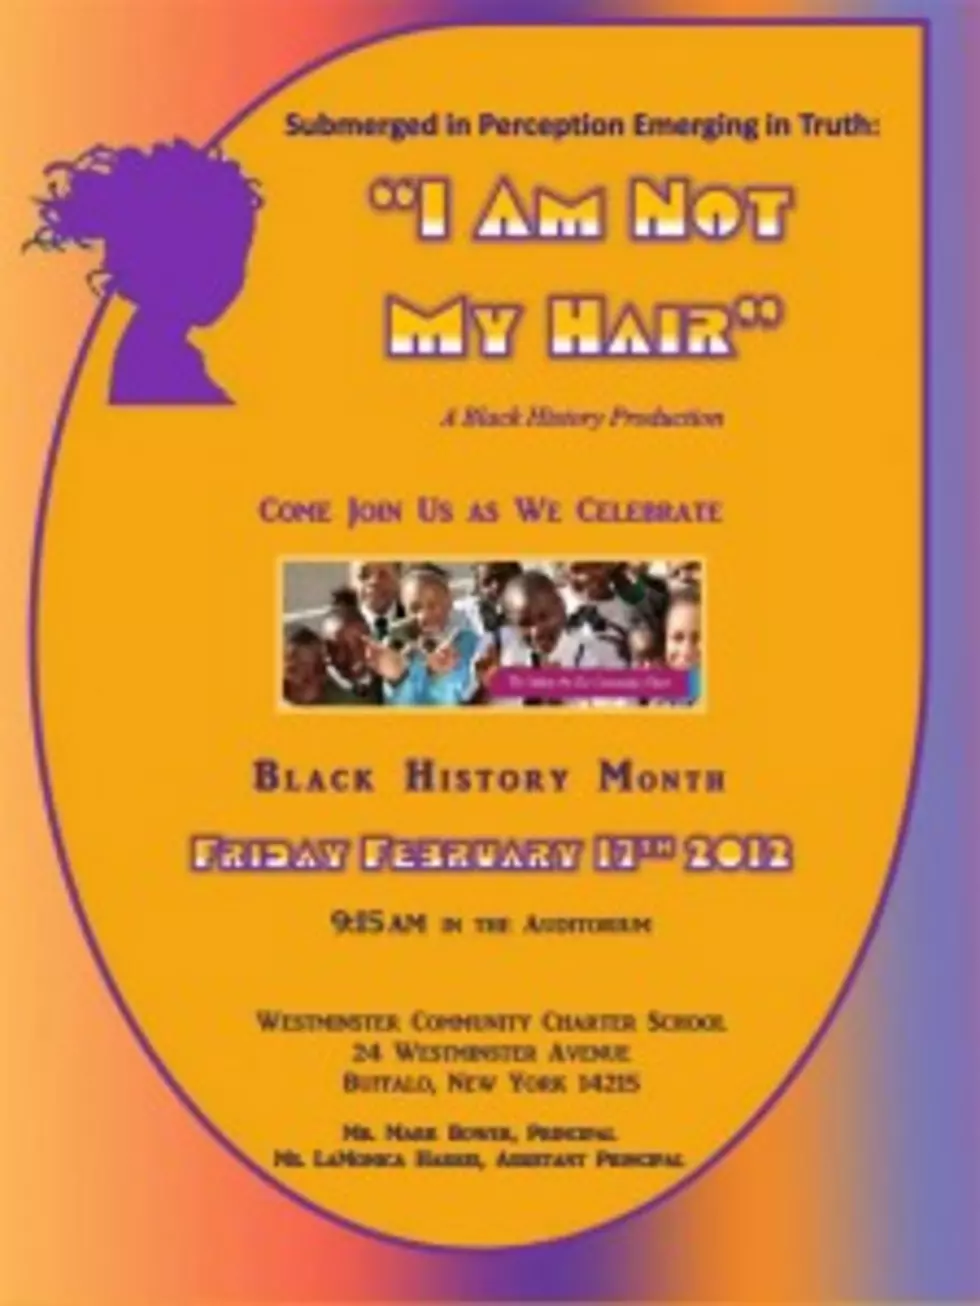 Black History: Buffalo School Production on Black Hair